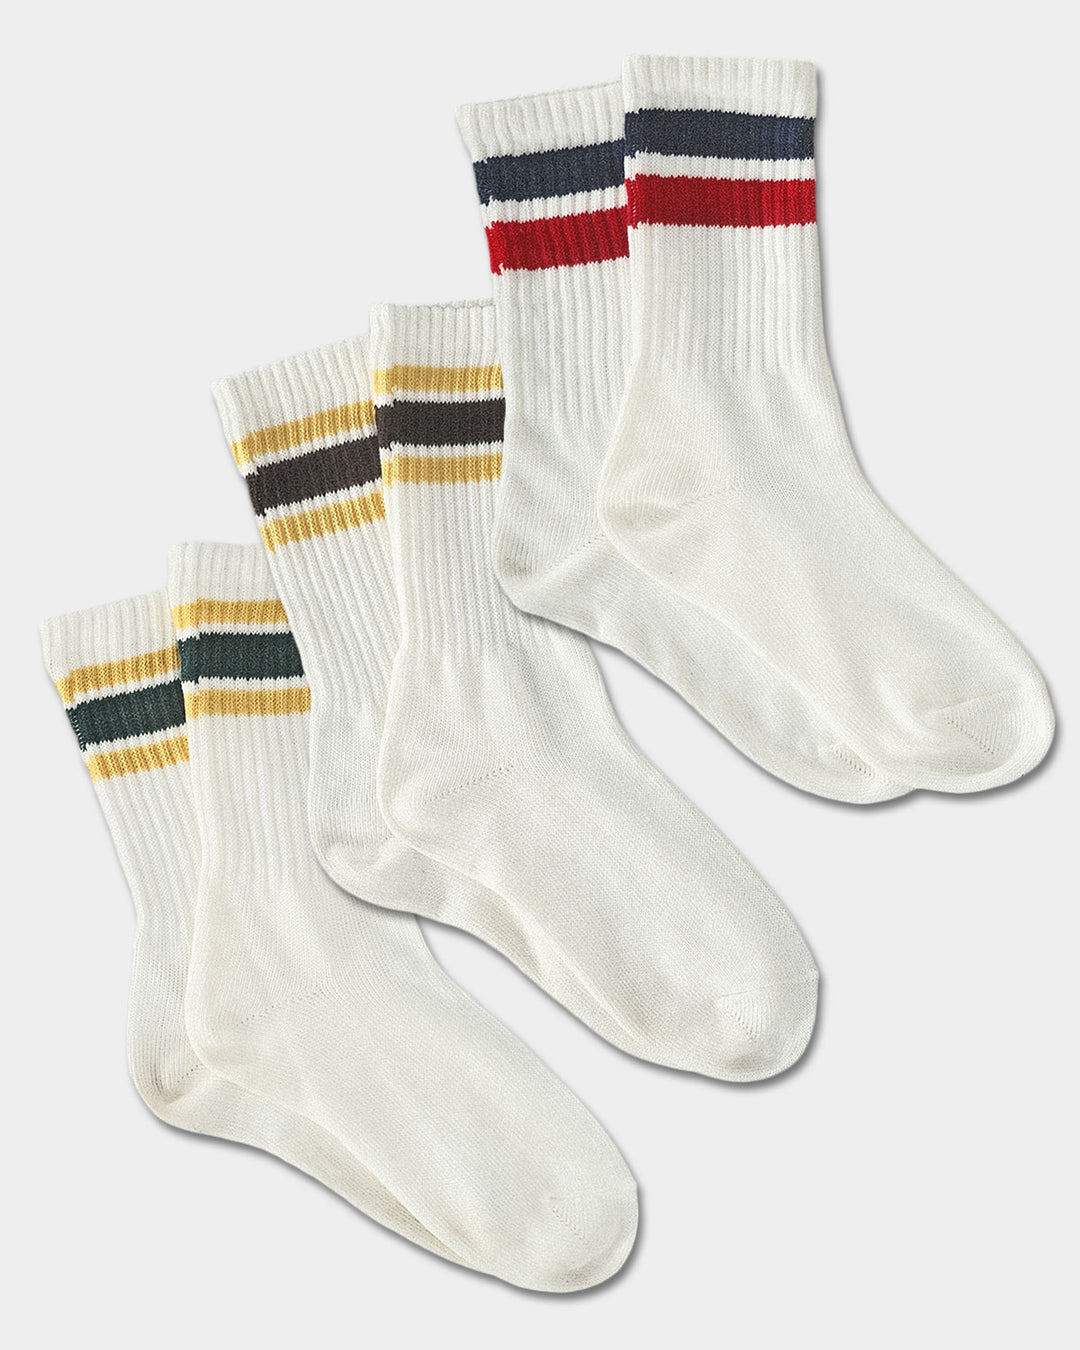 Sports Socks - 3 Pack